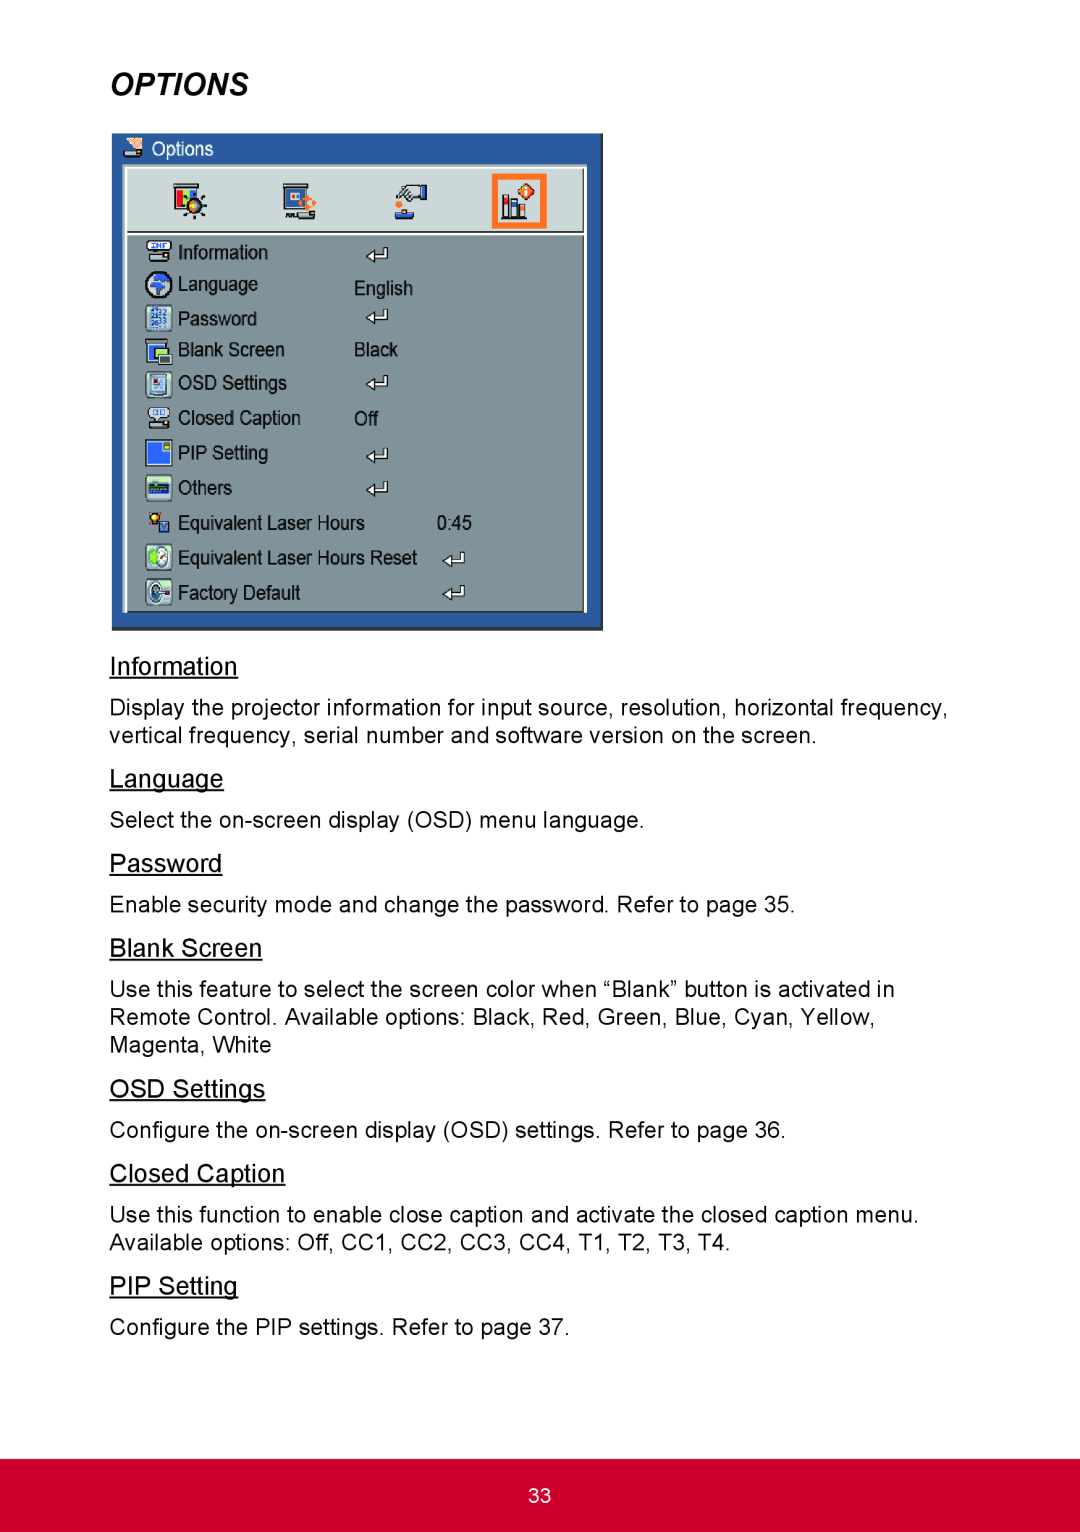 ViewSonic PRO9000 Options, Information, Language, Password, Blank Screen, OSD Settings, Closed Caption, PIP Setting 